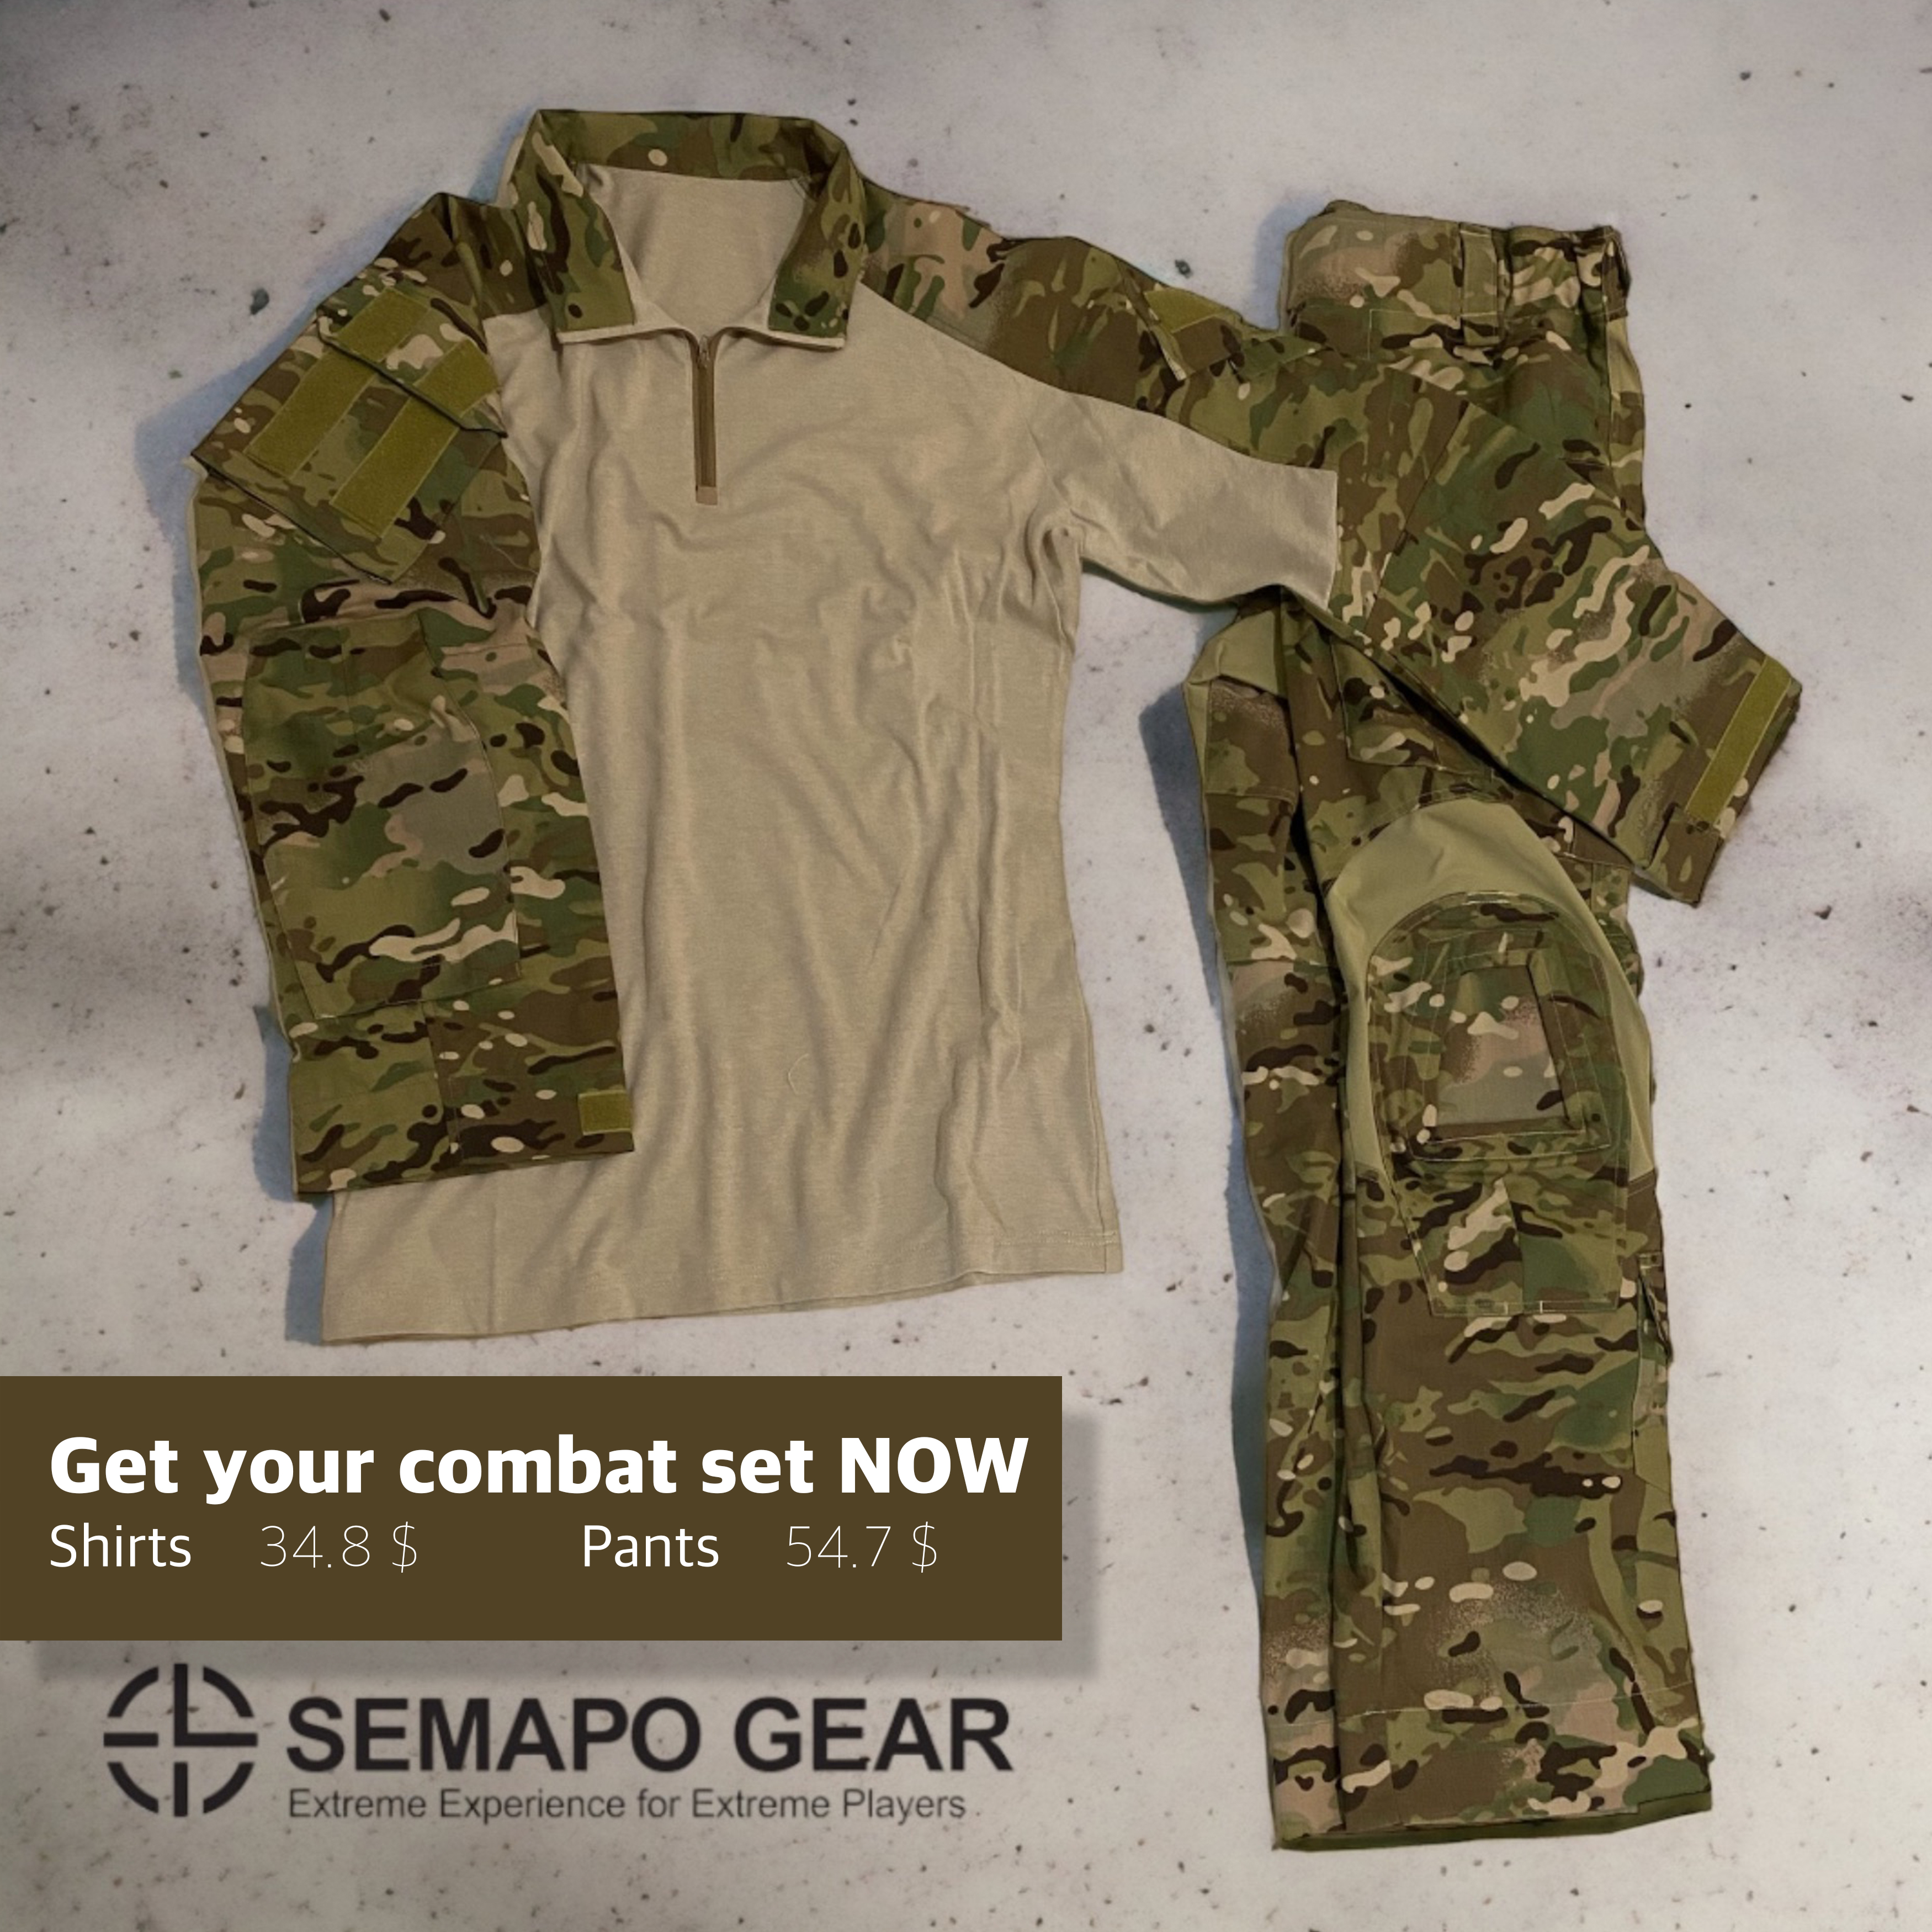 SEMAPO GEAR] - Welcome to SEMAPO GEAR website.